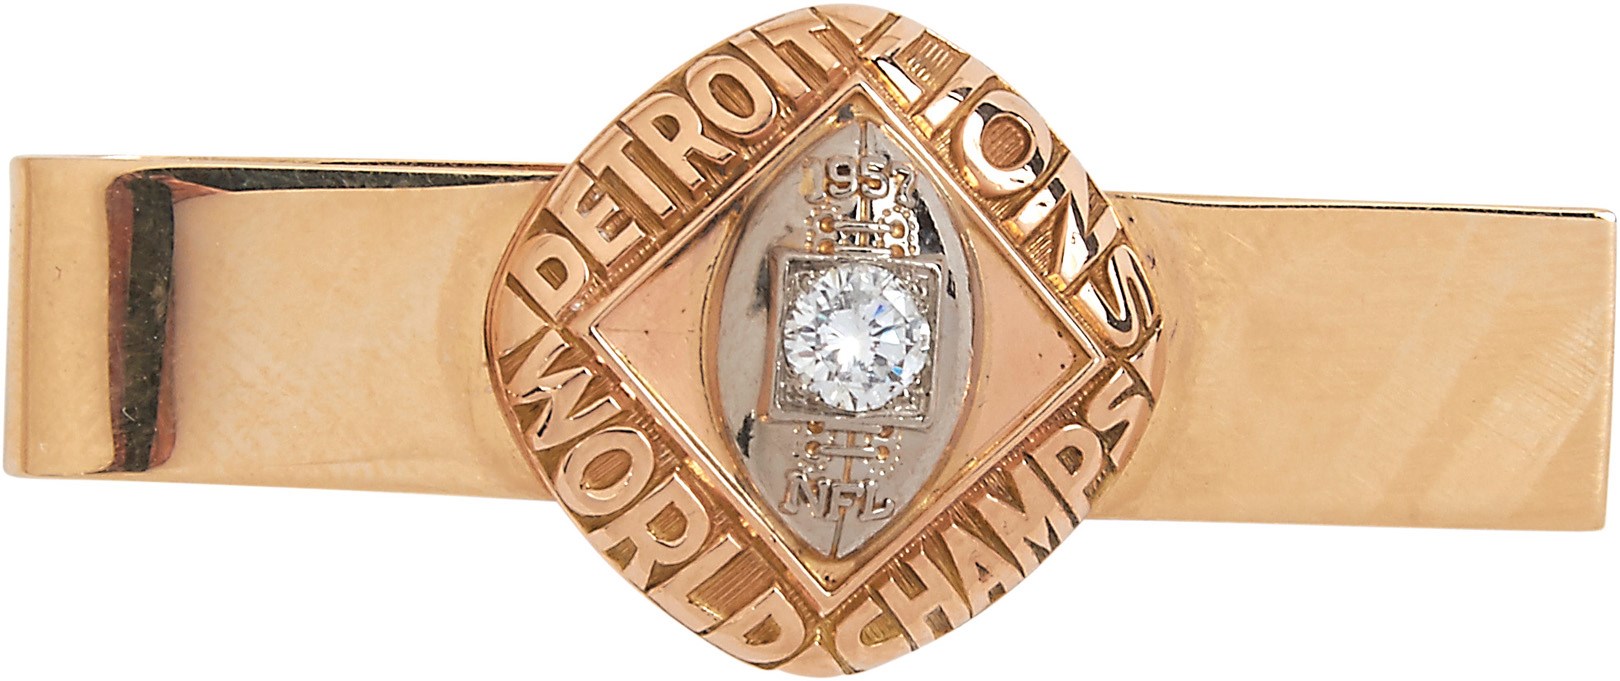 - 1957 Detroit Lions World Championship Tie-Bar